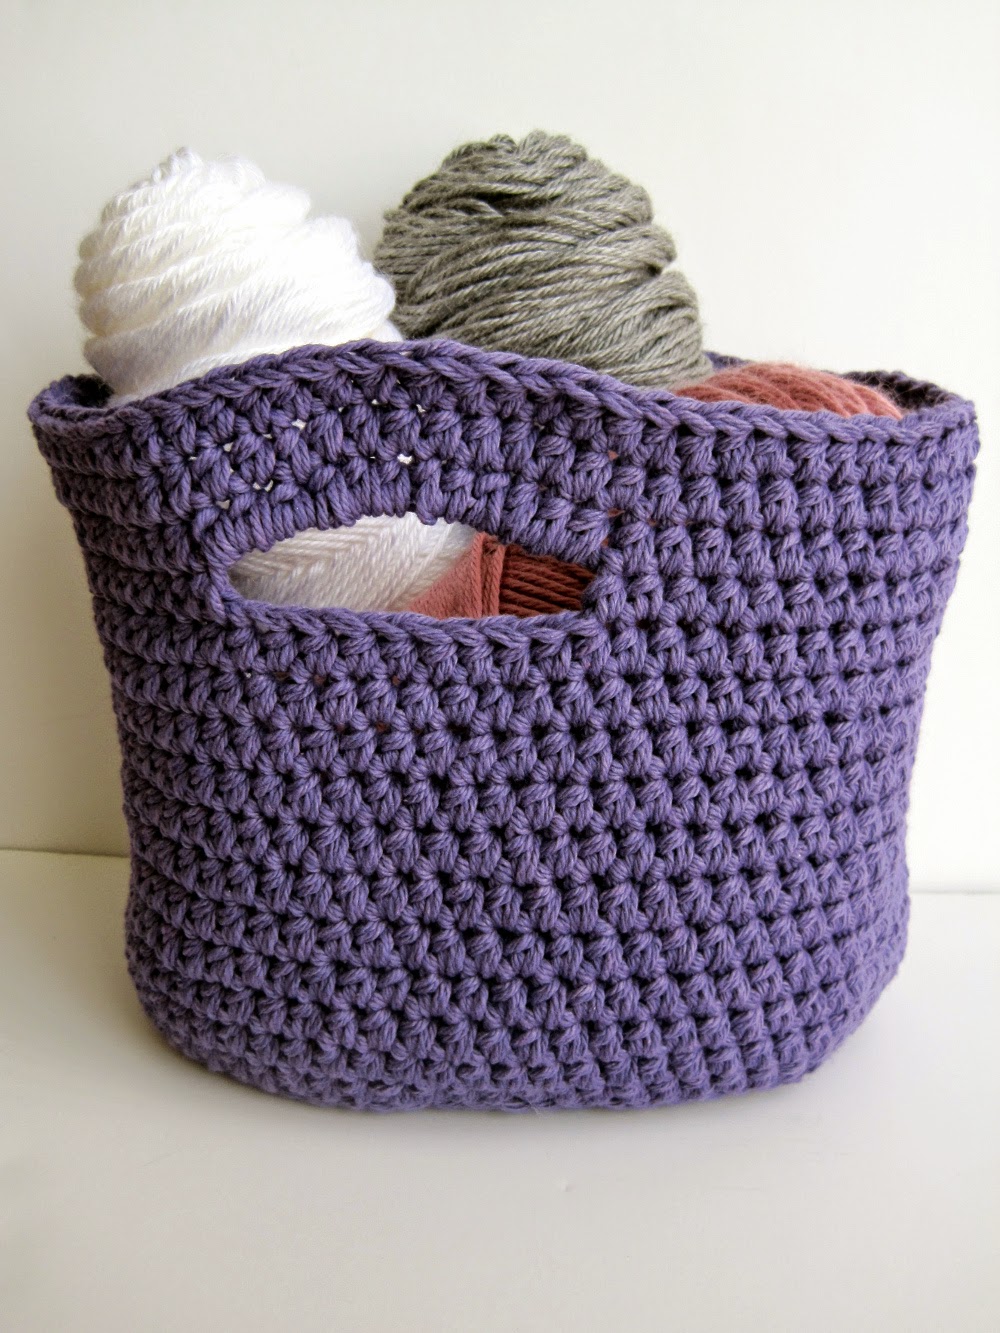 Crochet Stash Basket: free crochet pattern | She's Got the Notion